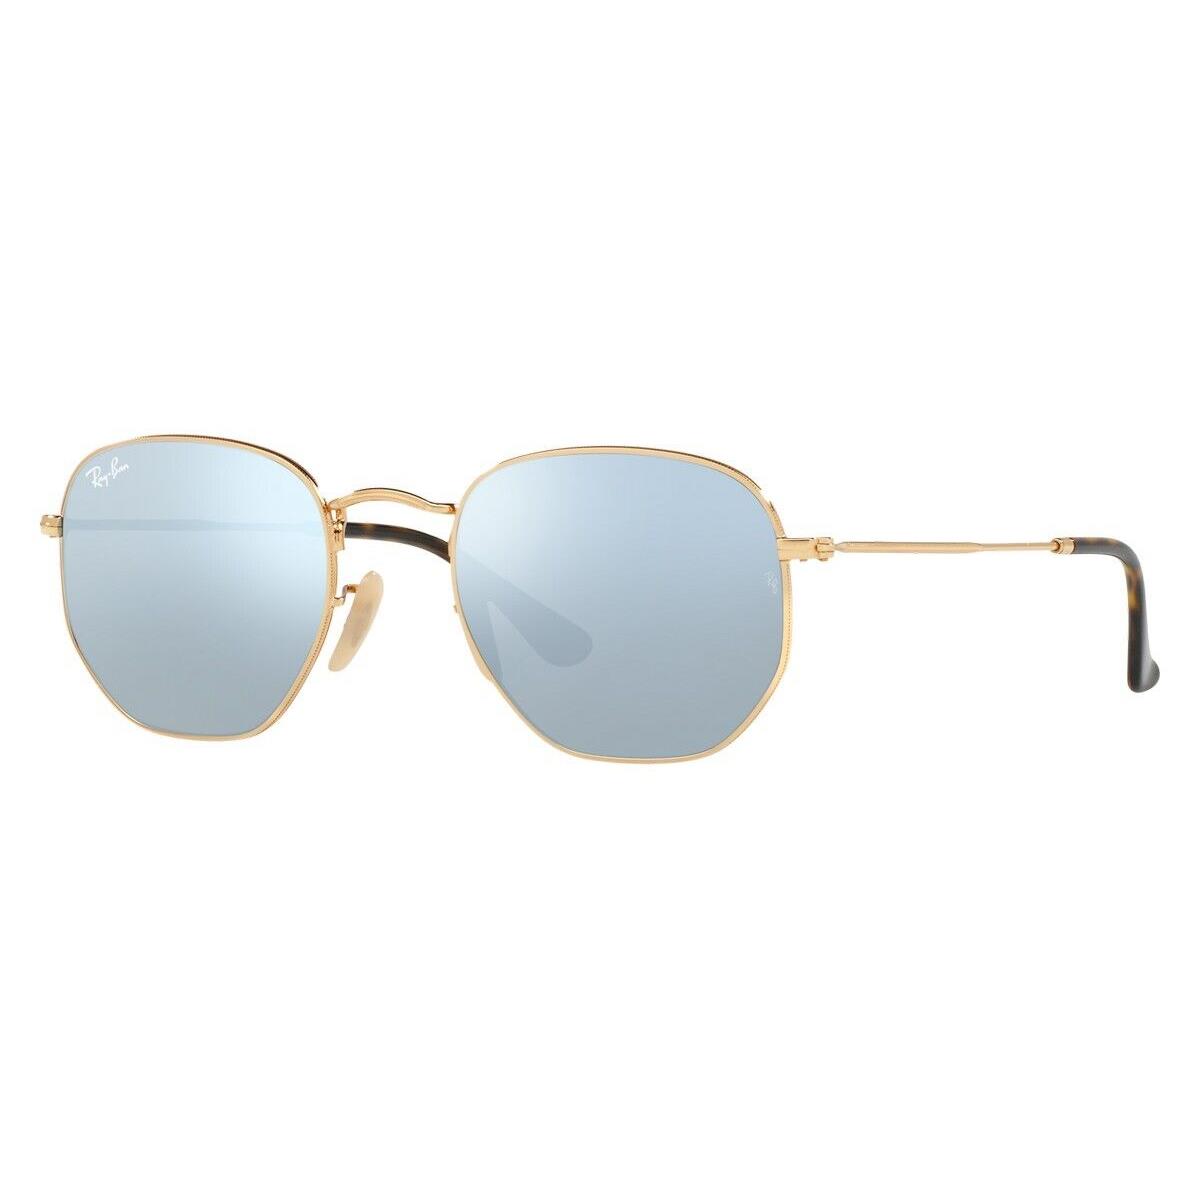 Ray-ban 0RB3548N Sunglasses Unisex Gold Geometric 51mm - Frame: Gold, Lens: Grey Flash, Model: